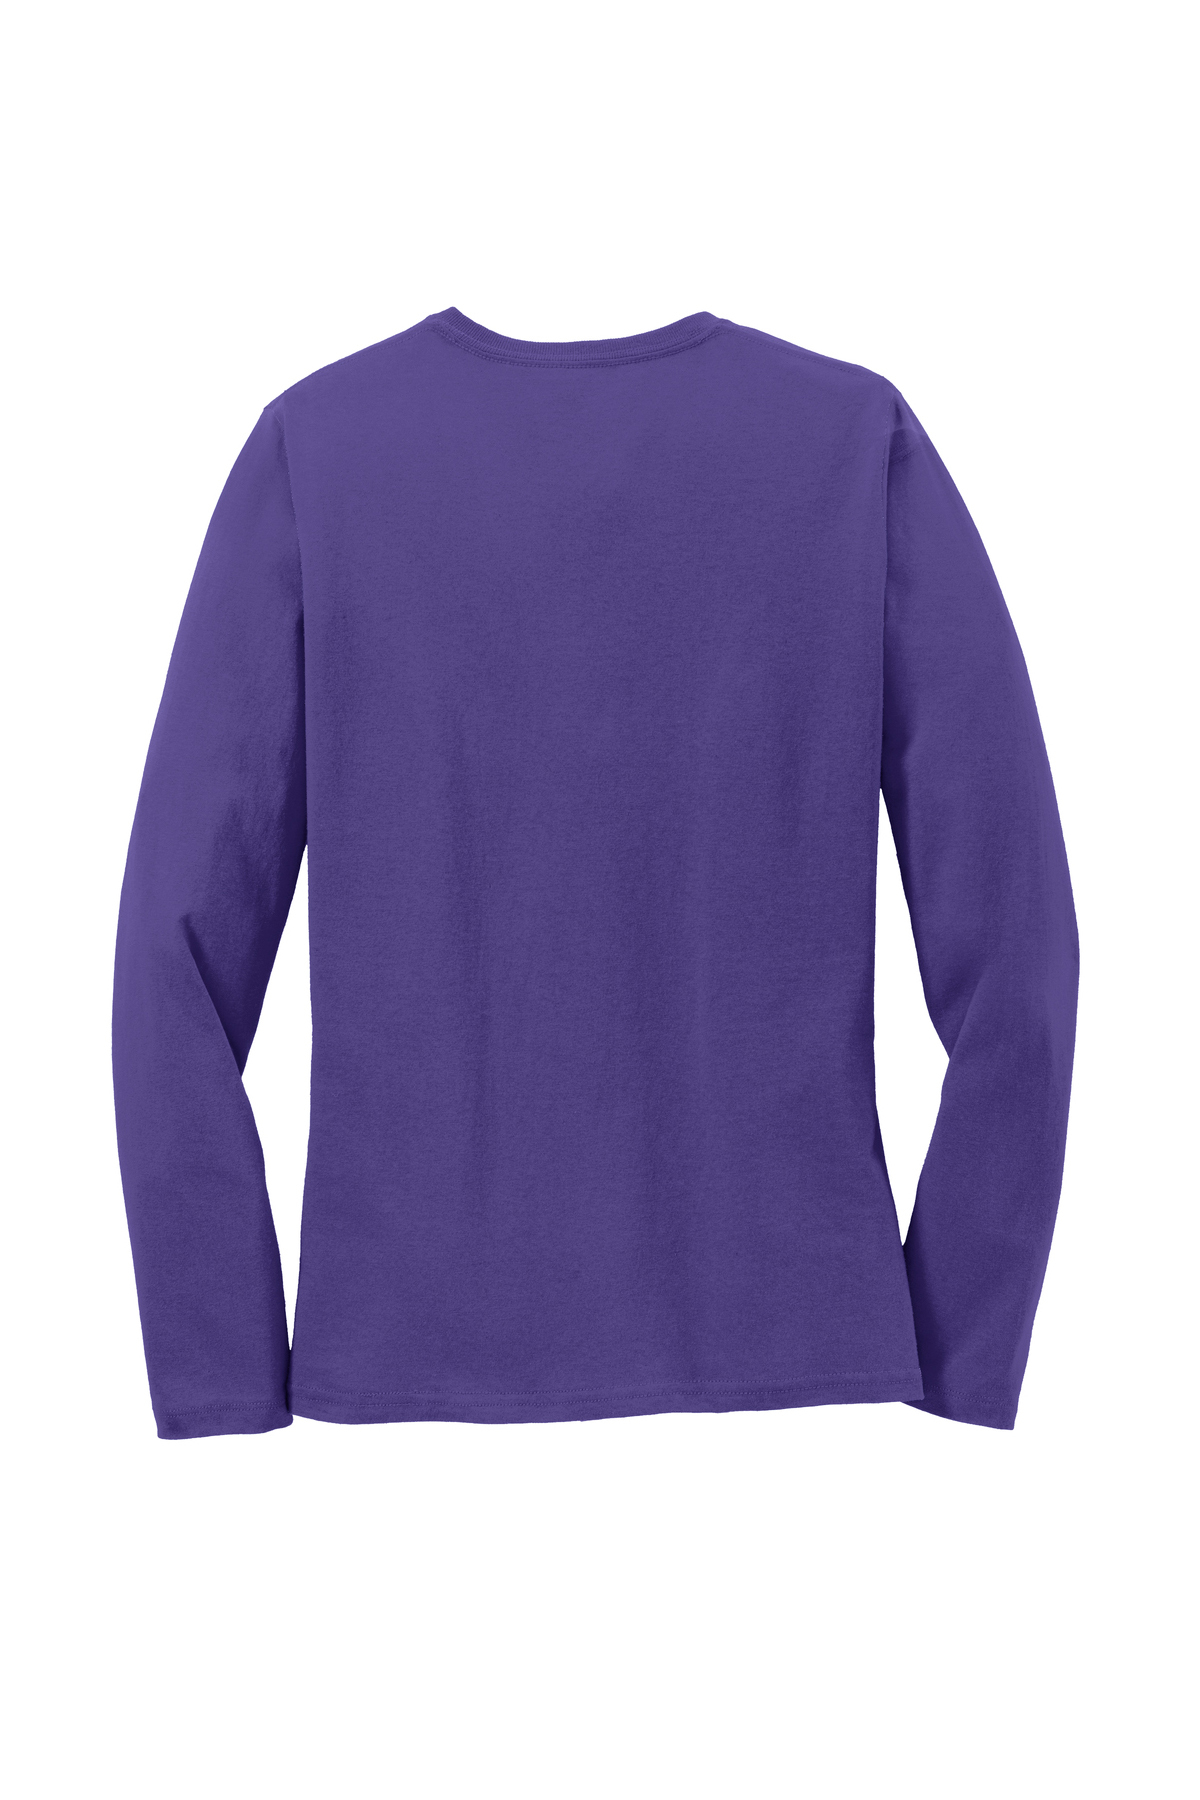 Kathmandu ultraCORE purple long-sleeved top, M – Shop on Carroll